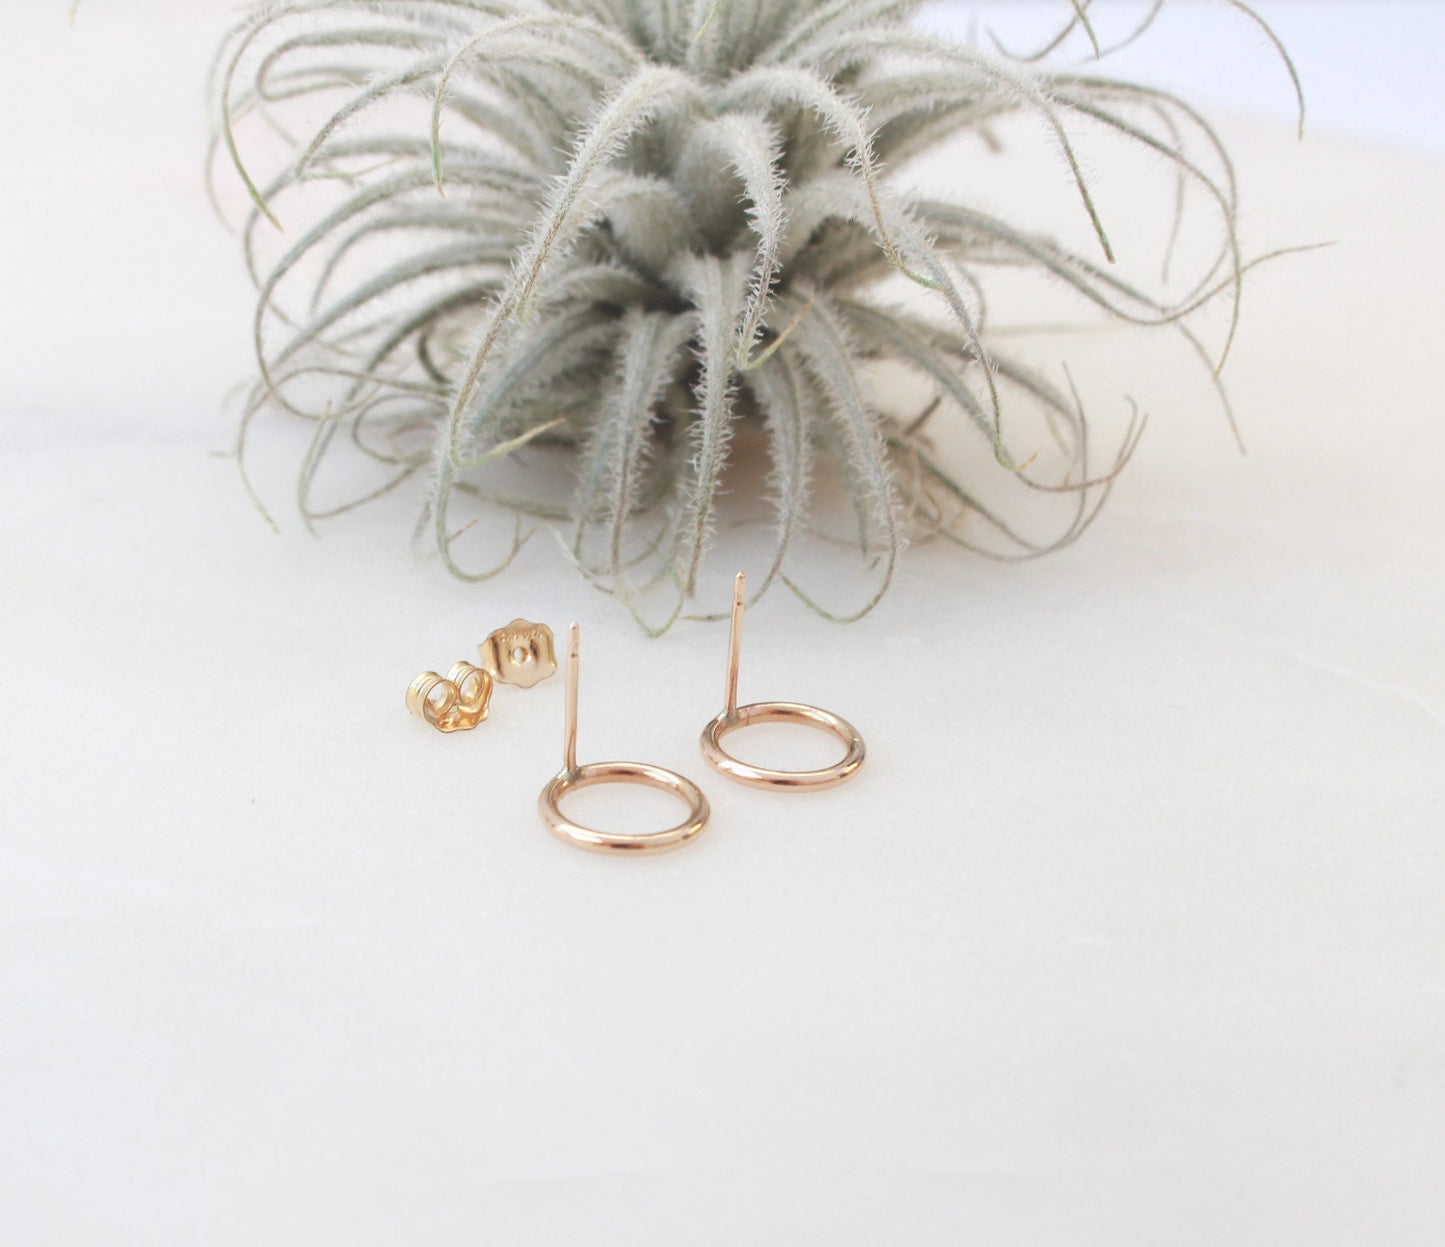 Gold Circle Stud Earrings - 14K Gold Filled, 10mm O Ring Circle